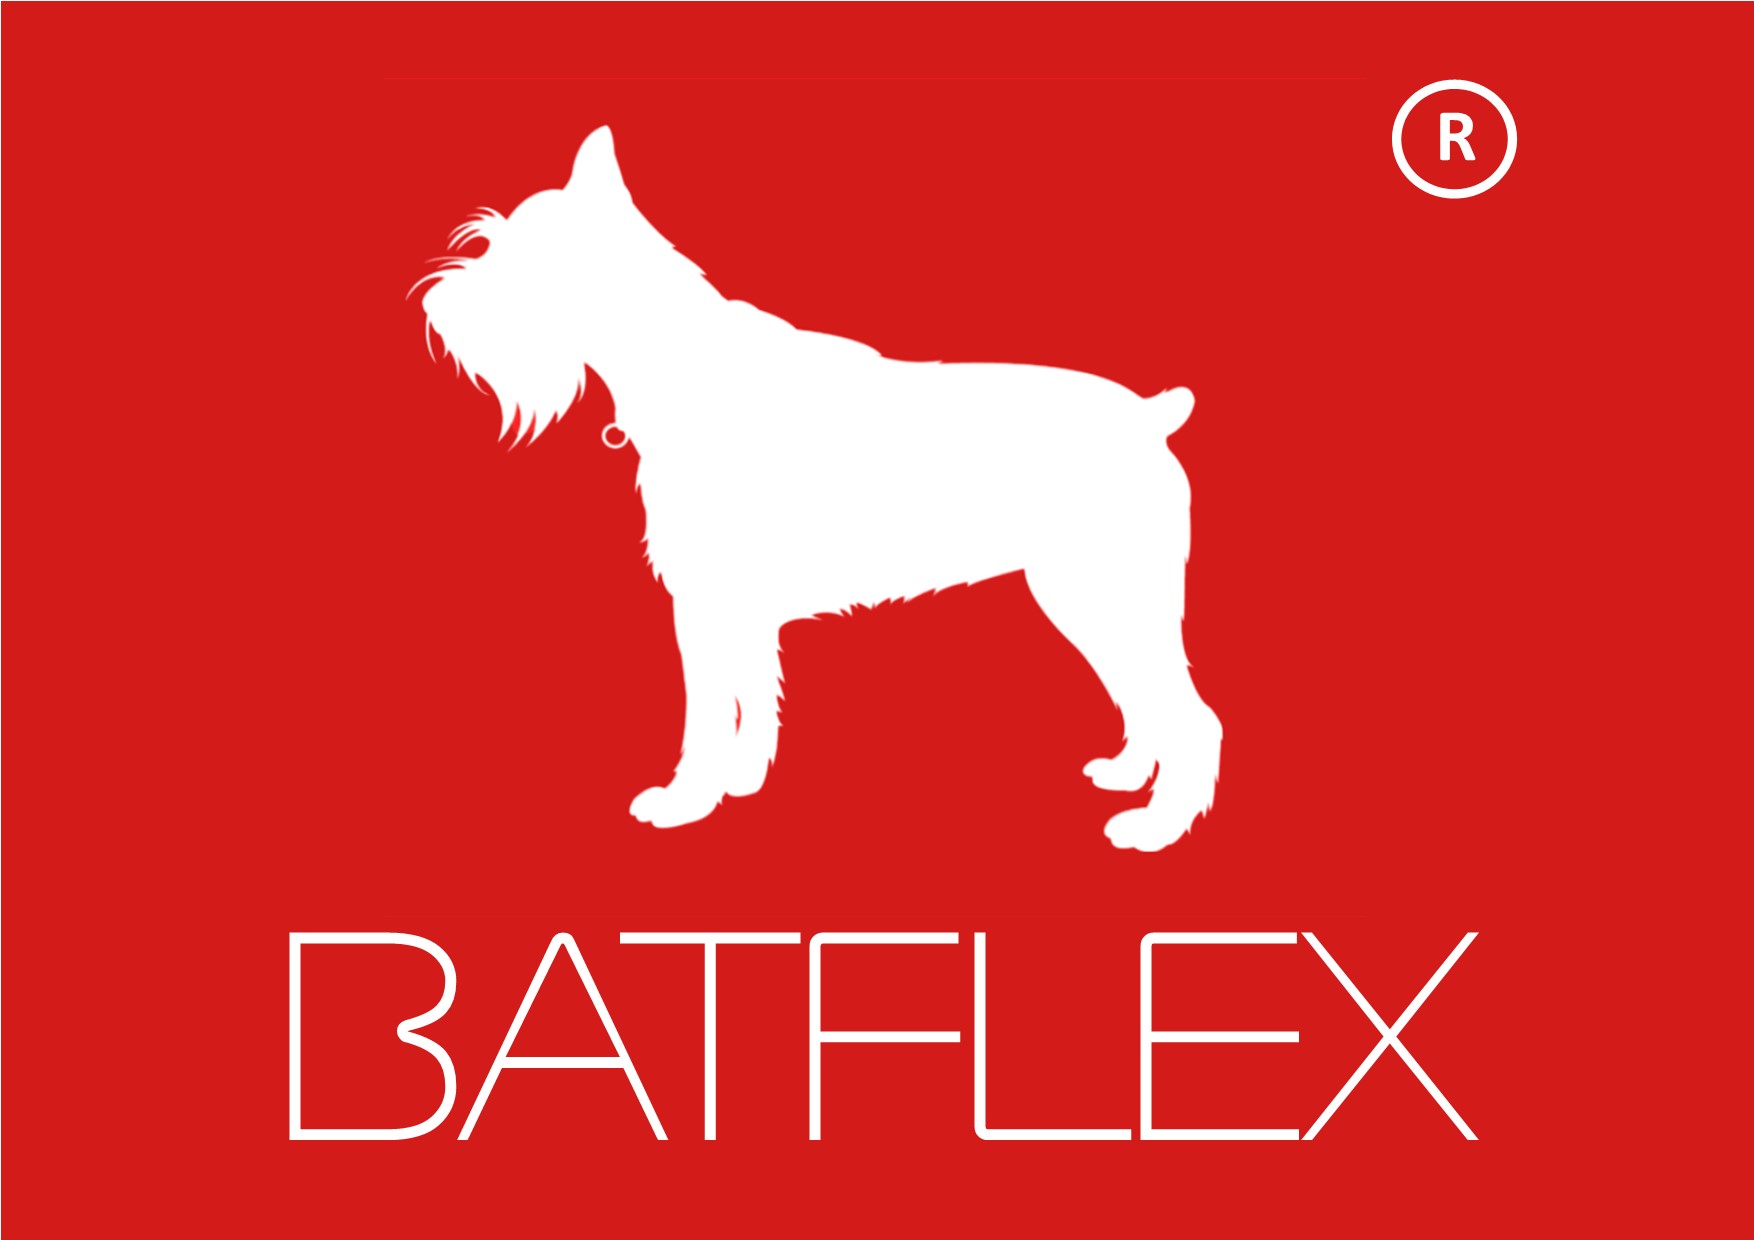 Batflex logo